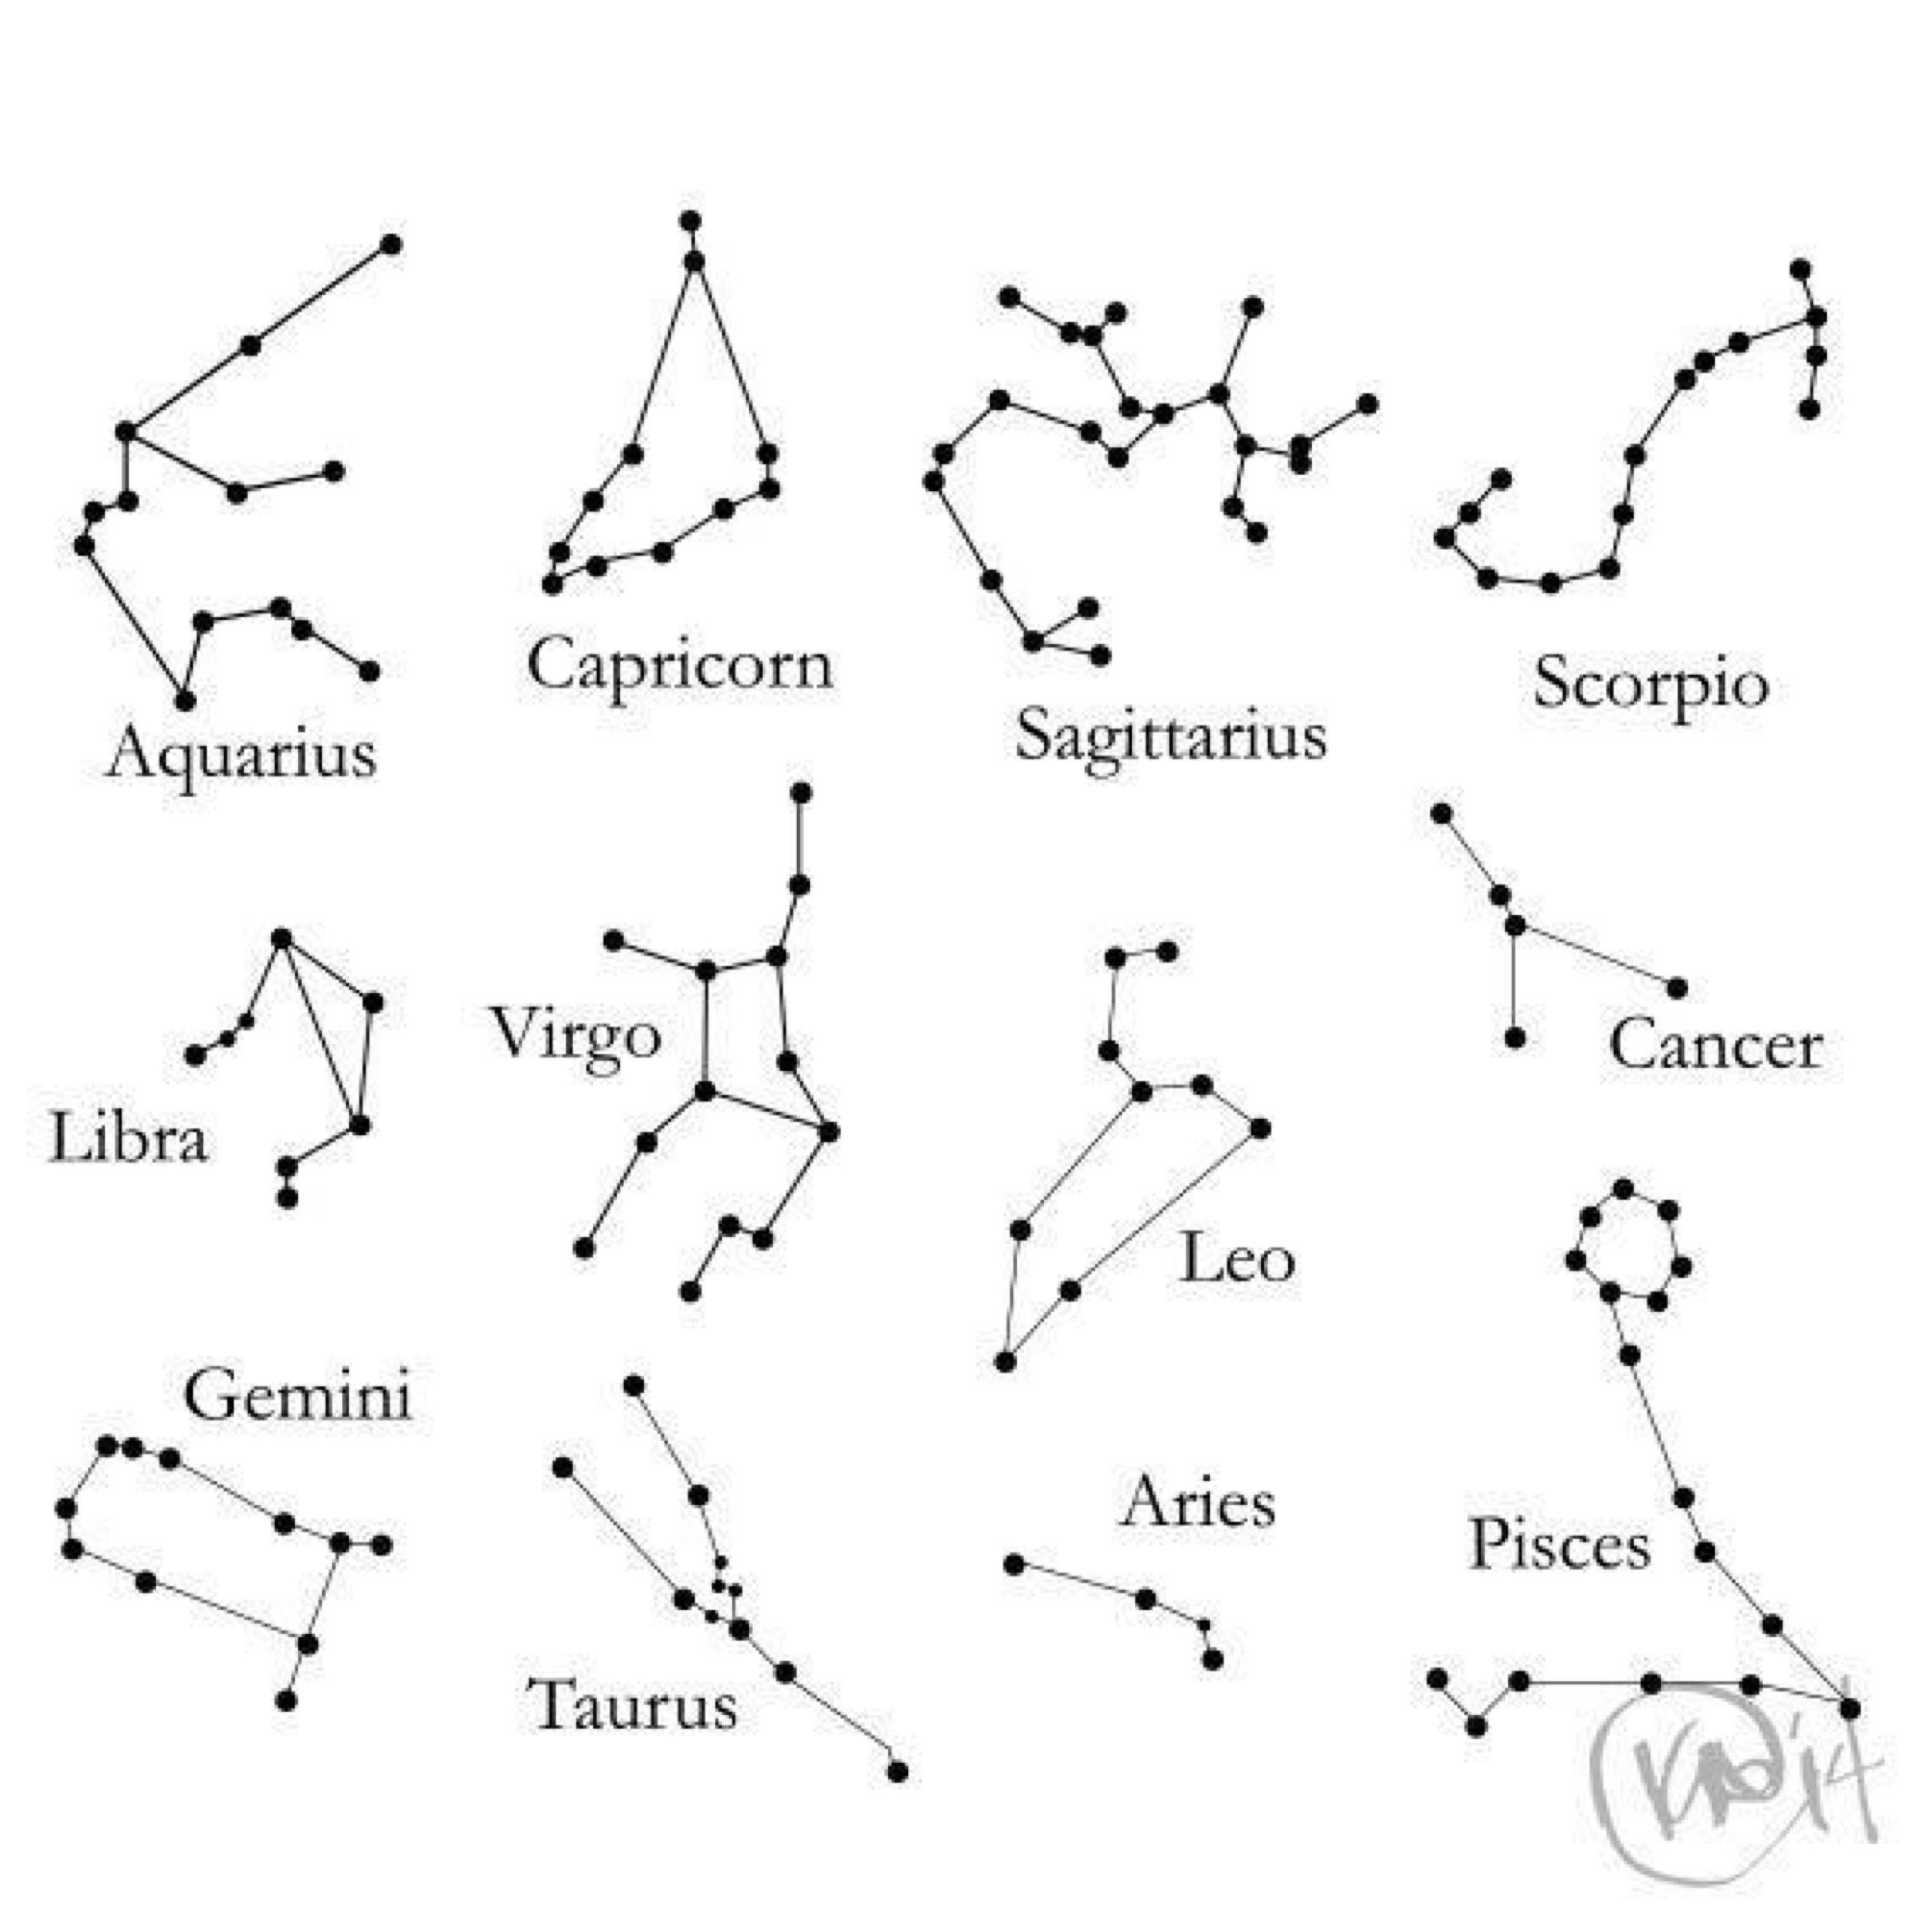 Созвездие схемы по точкам. Ариес знак зодиака схема созвездия. Созвездие Стрелец схема по точкам. Созвездие Овен схема по точкам. Дева Созвездие схема.